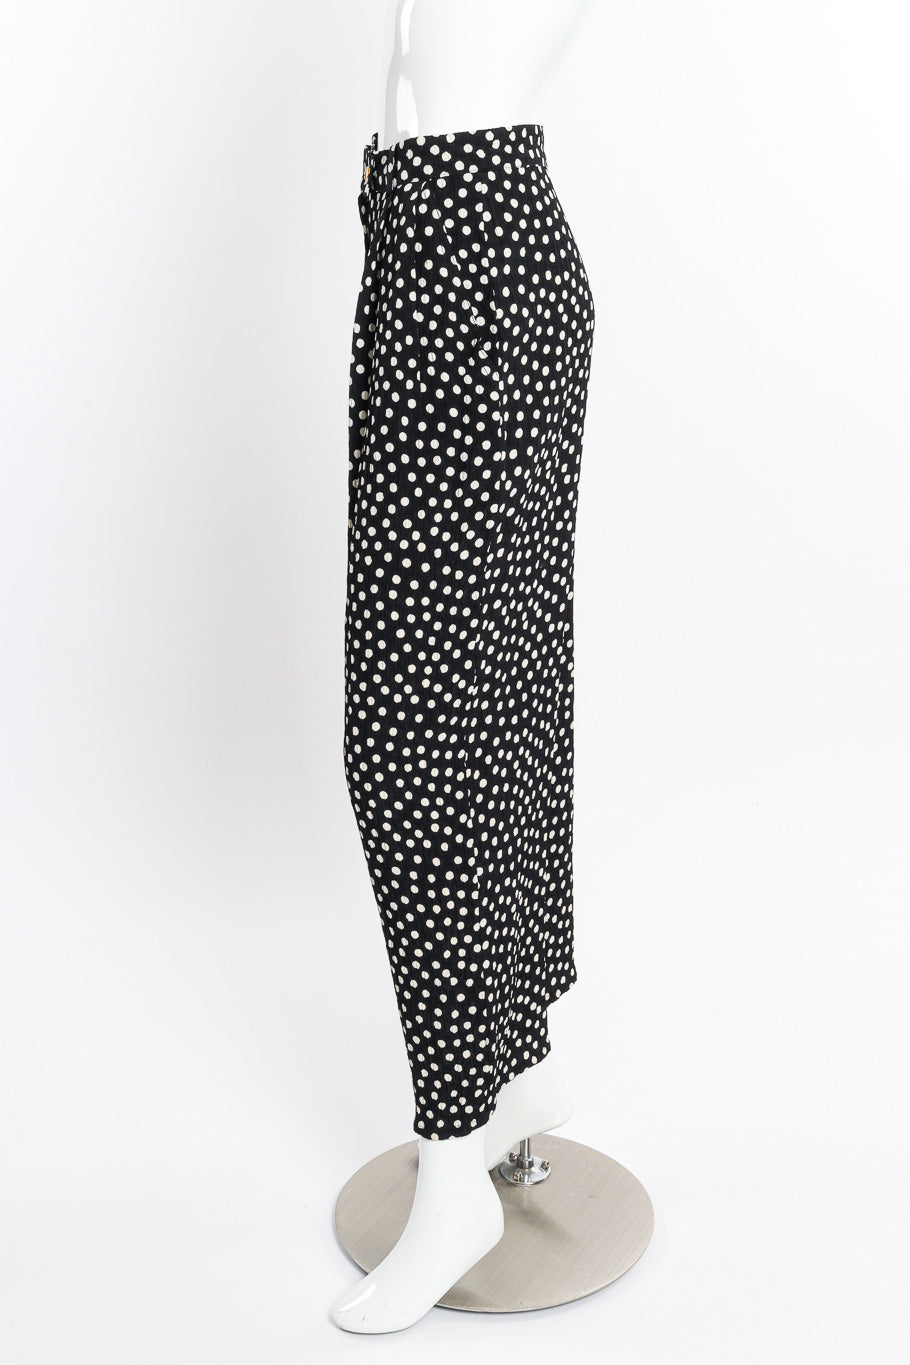 Vintage Sonia Rykiel Polka Dot Jacket and Skirt Set pant side on mannequin @recessla